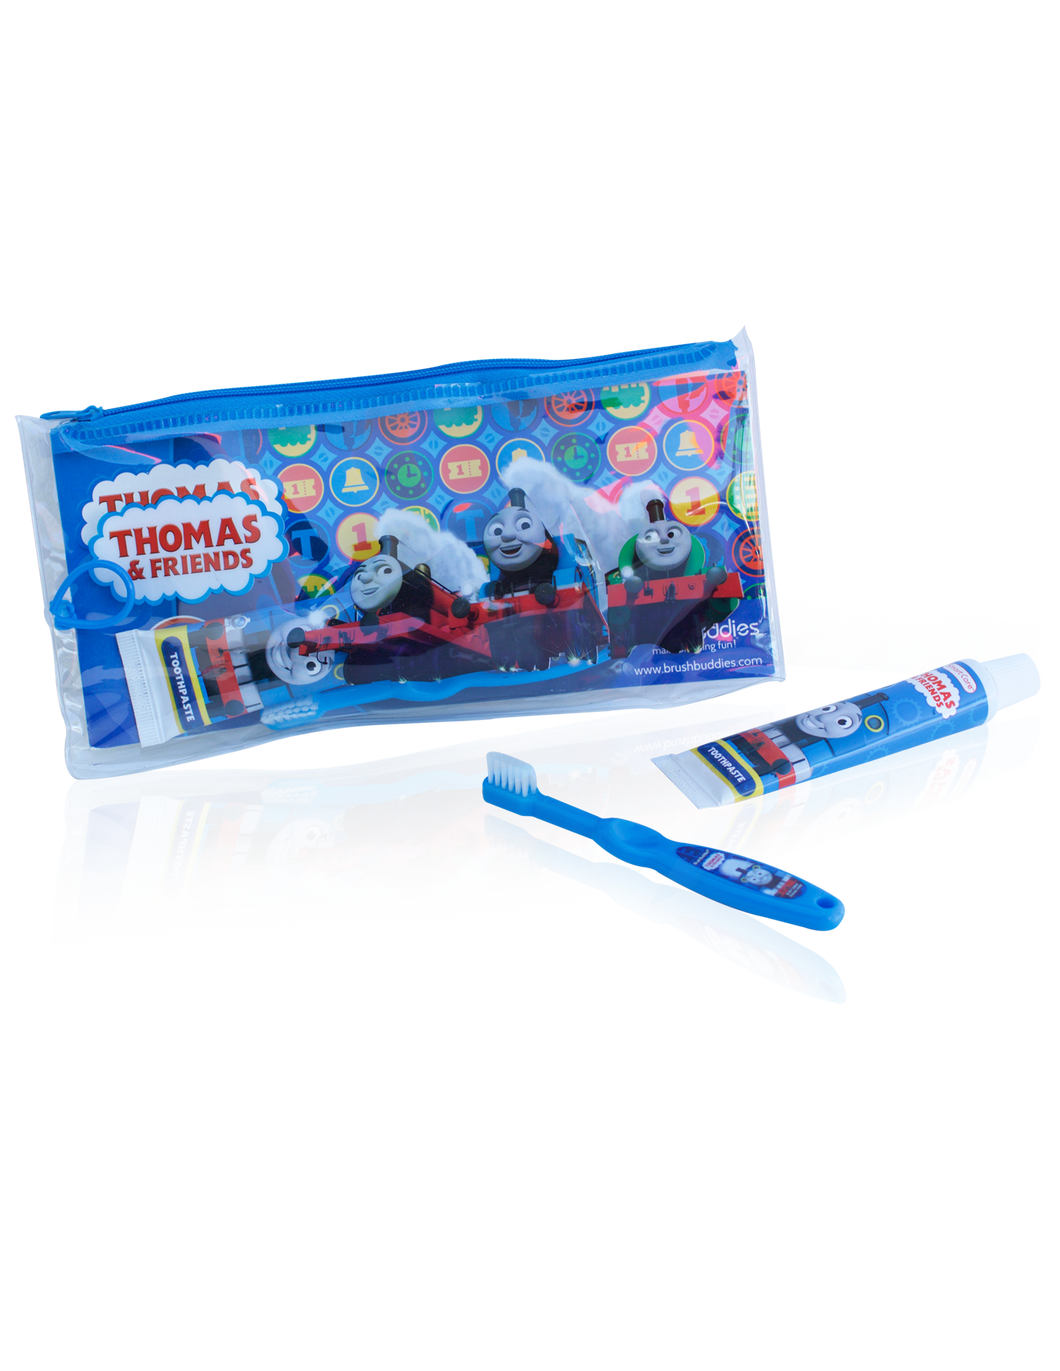 Thomas & Friends Toddler Kit